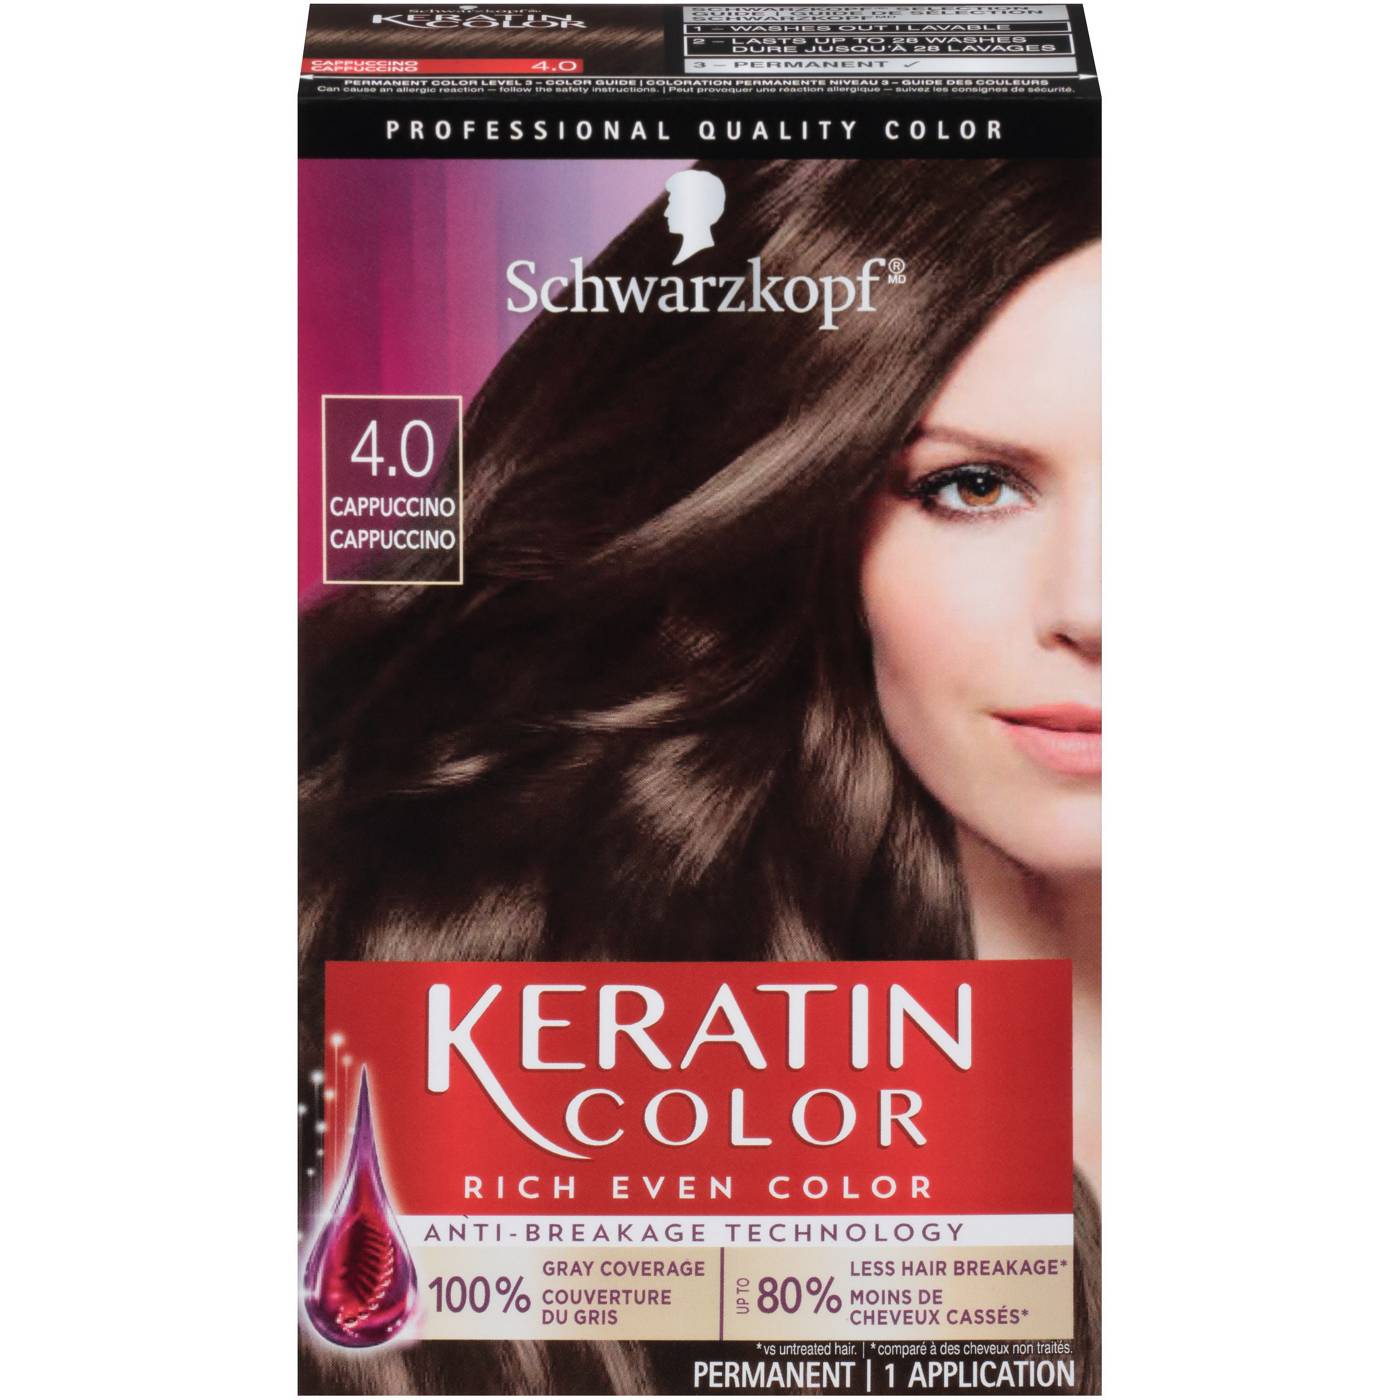 Schwarzkopf Keratin Color Permanent Hair Color Cream, 4.0 Cappuccino; image 1 of 6